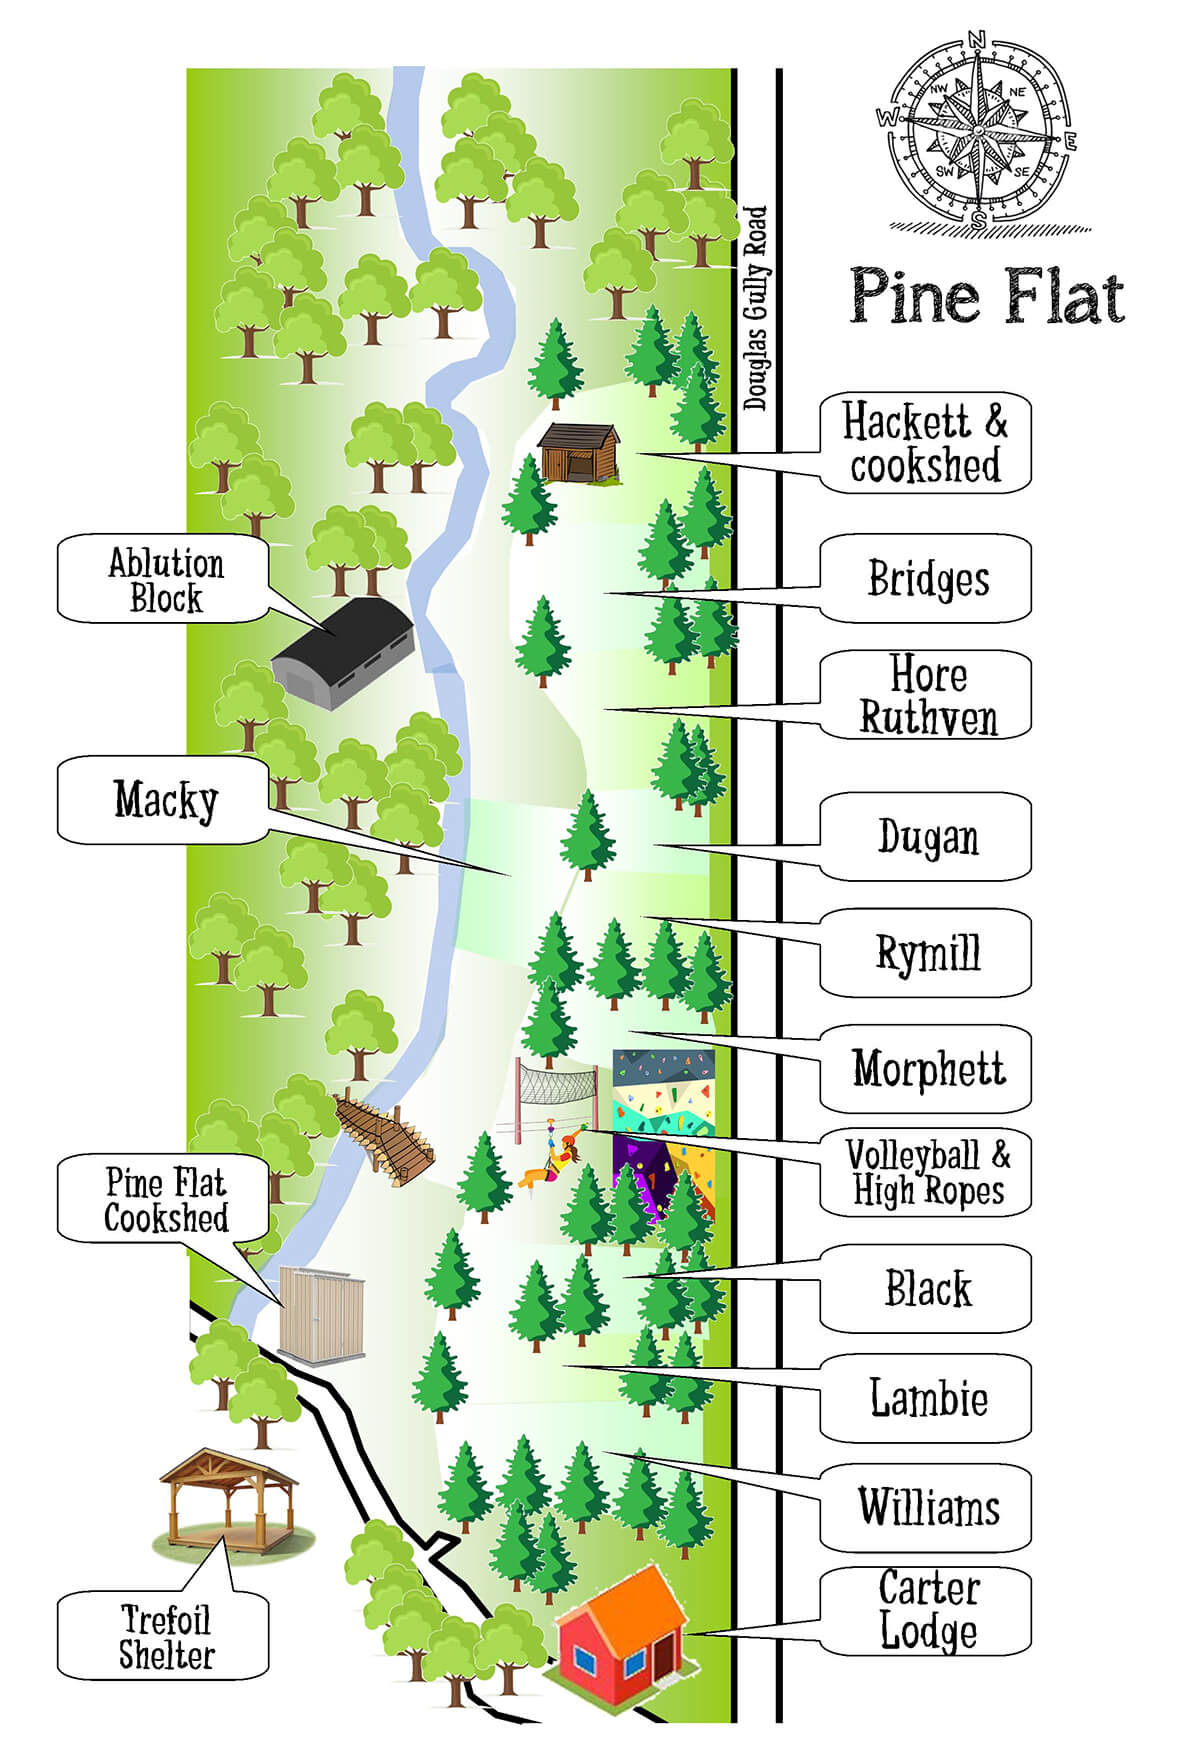 Pine Flat Campsite